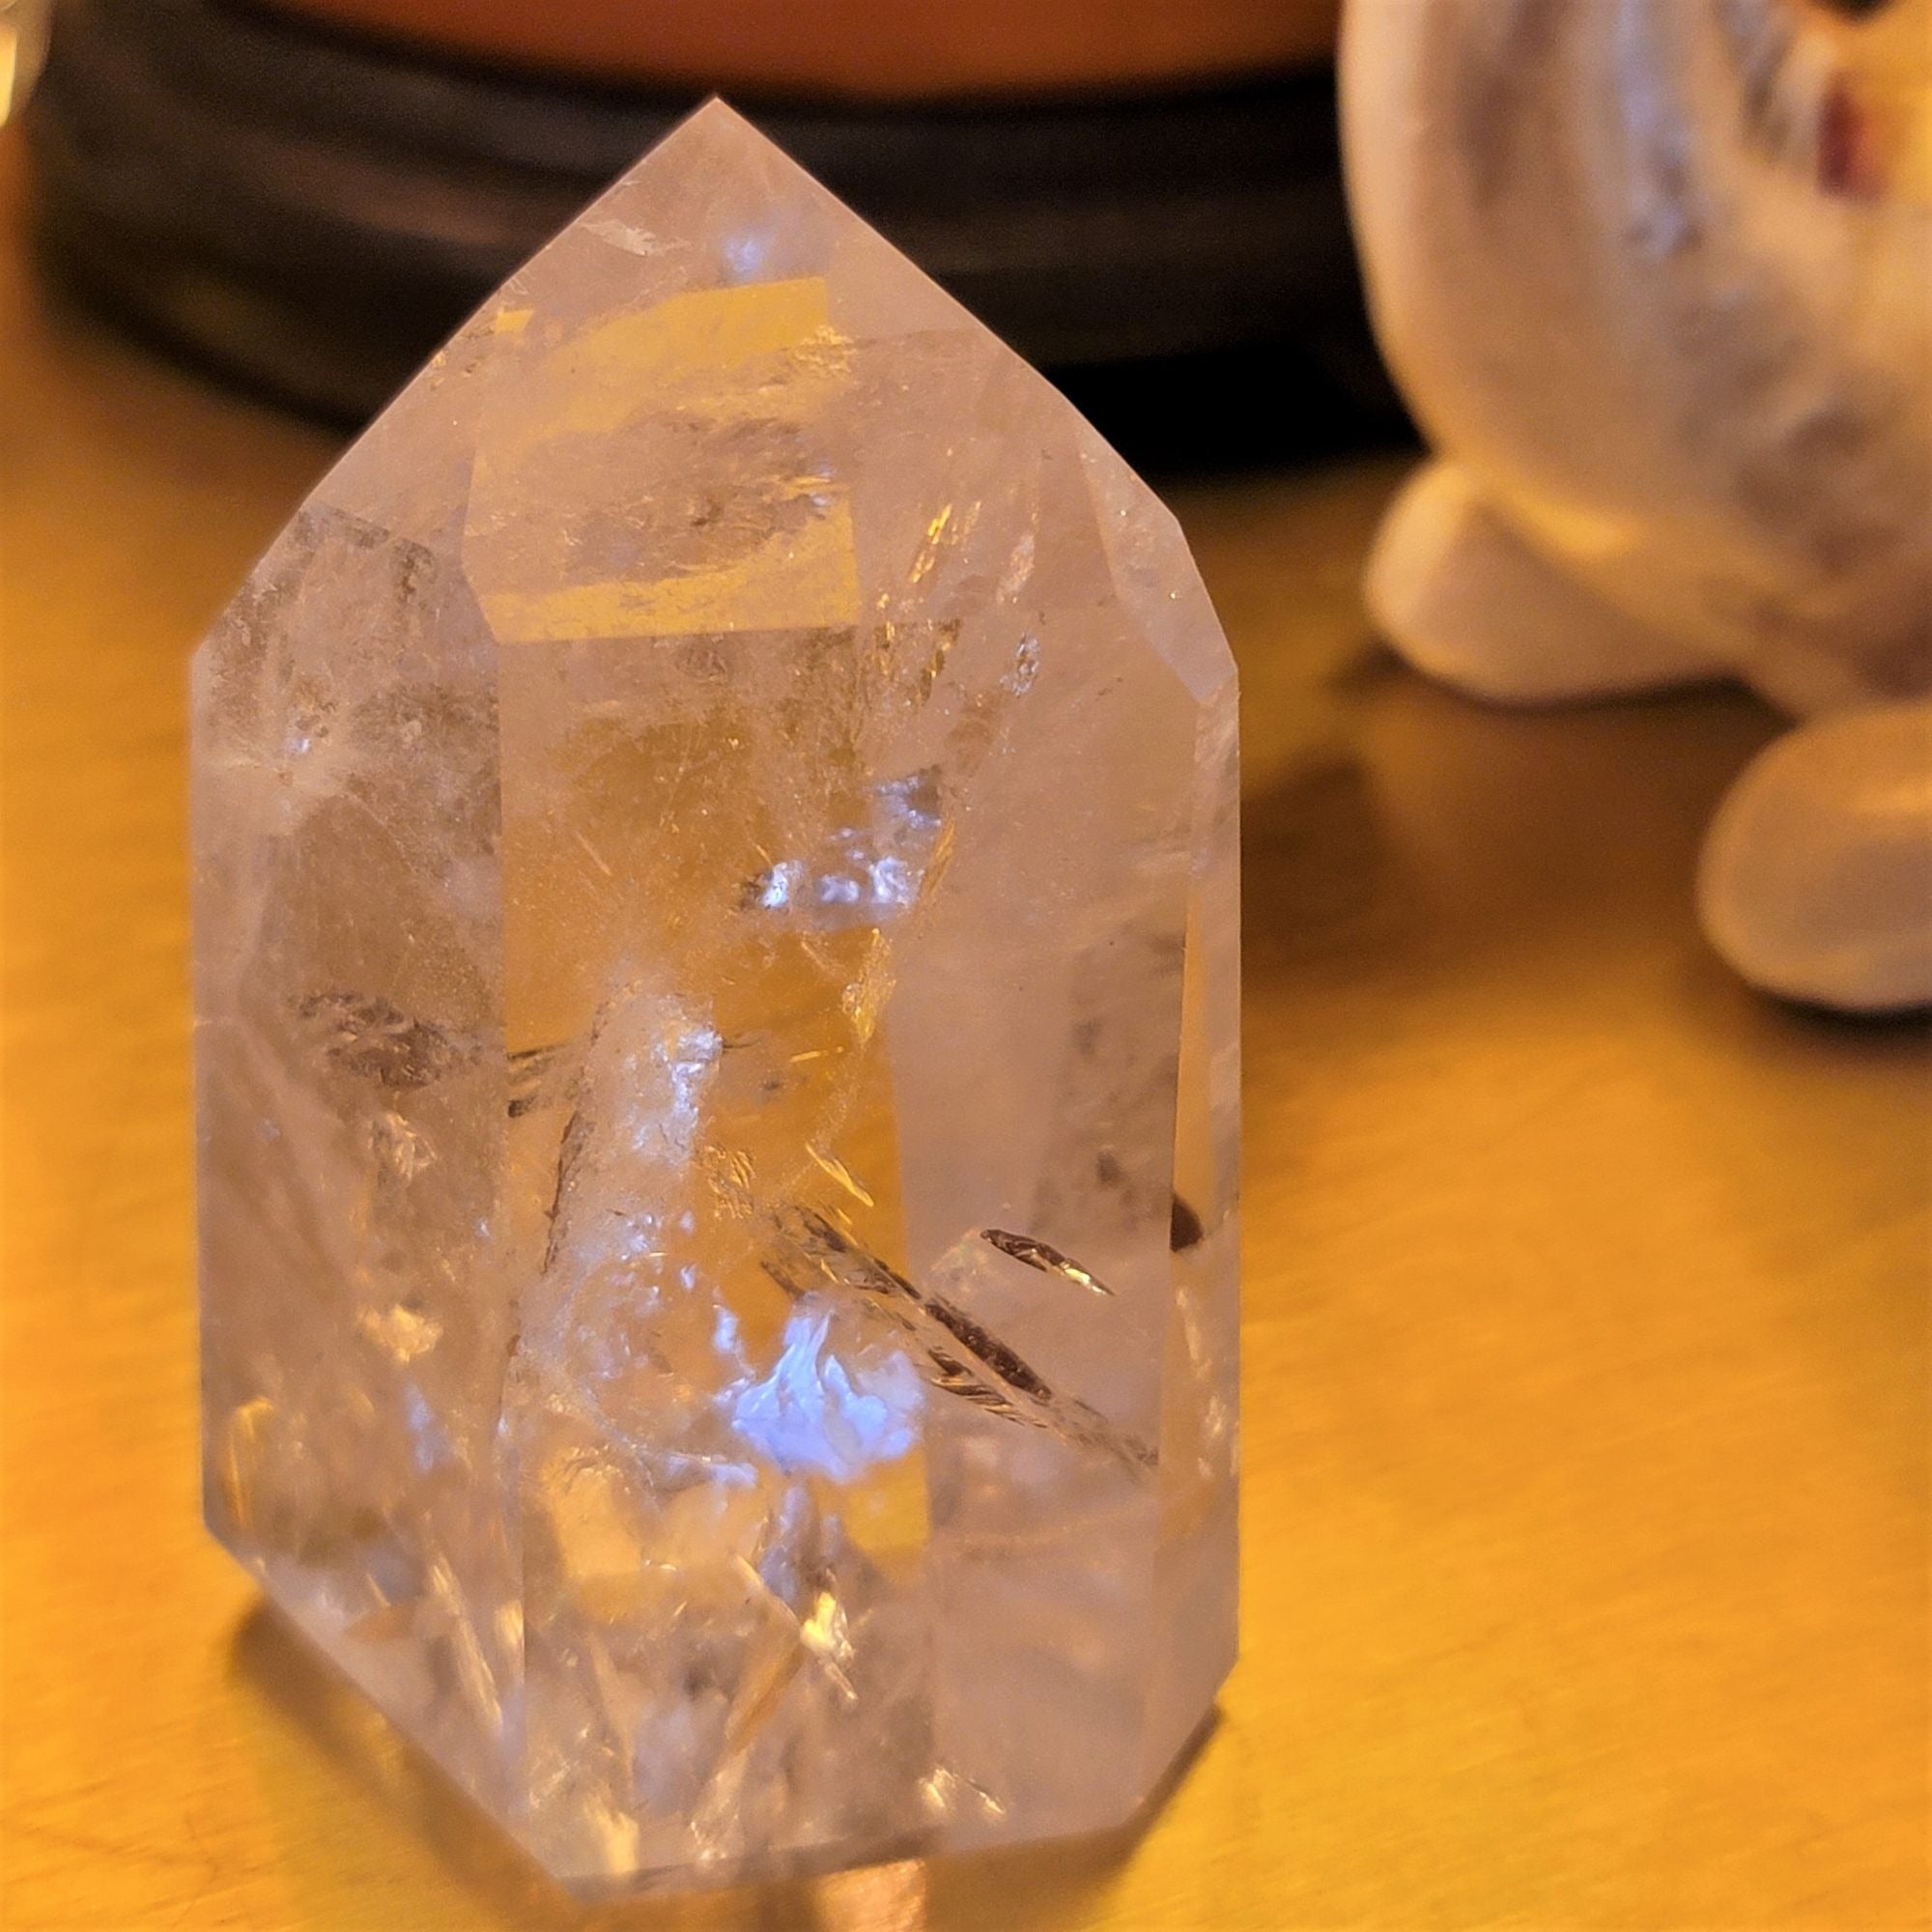 Brilliant Quartz Crystal Pillar Natural Inclusions Protecting Stone